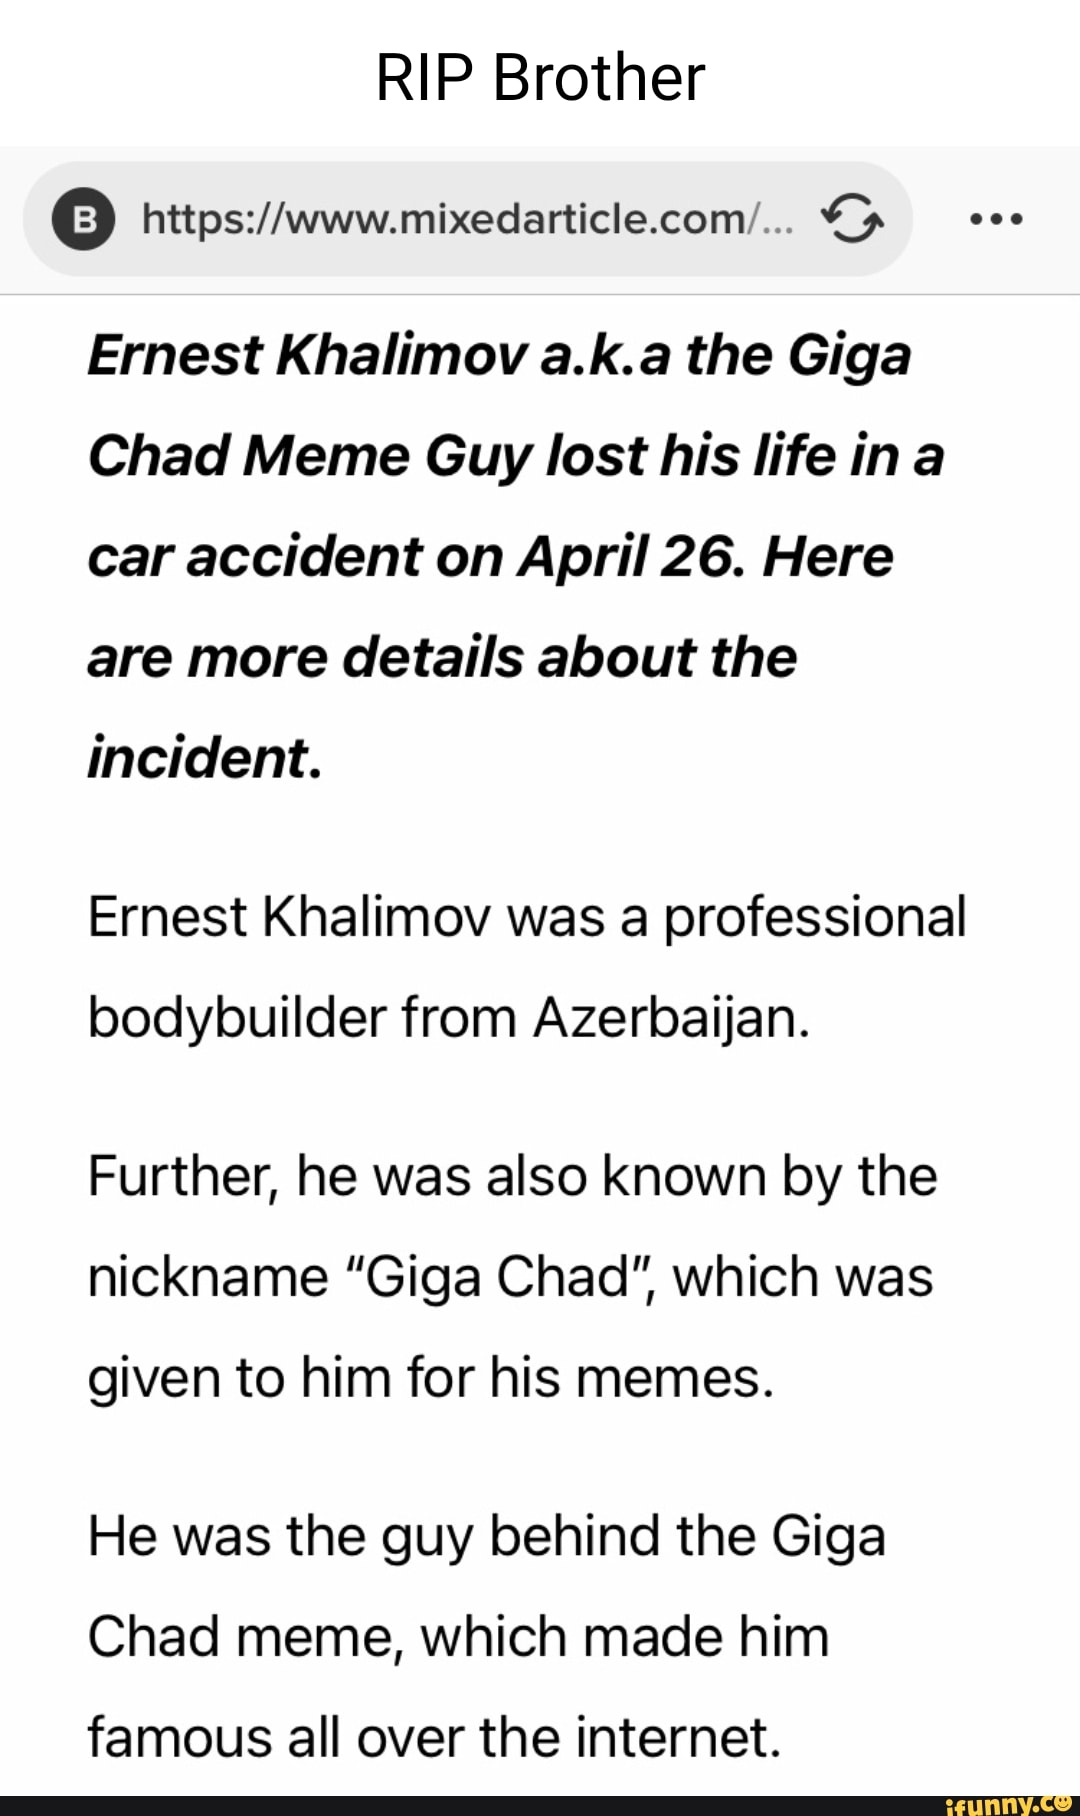 RIP Giga Chad - Ernest Khalimov